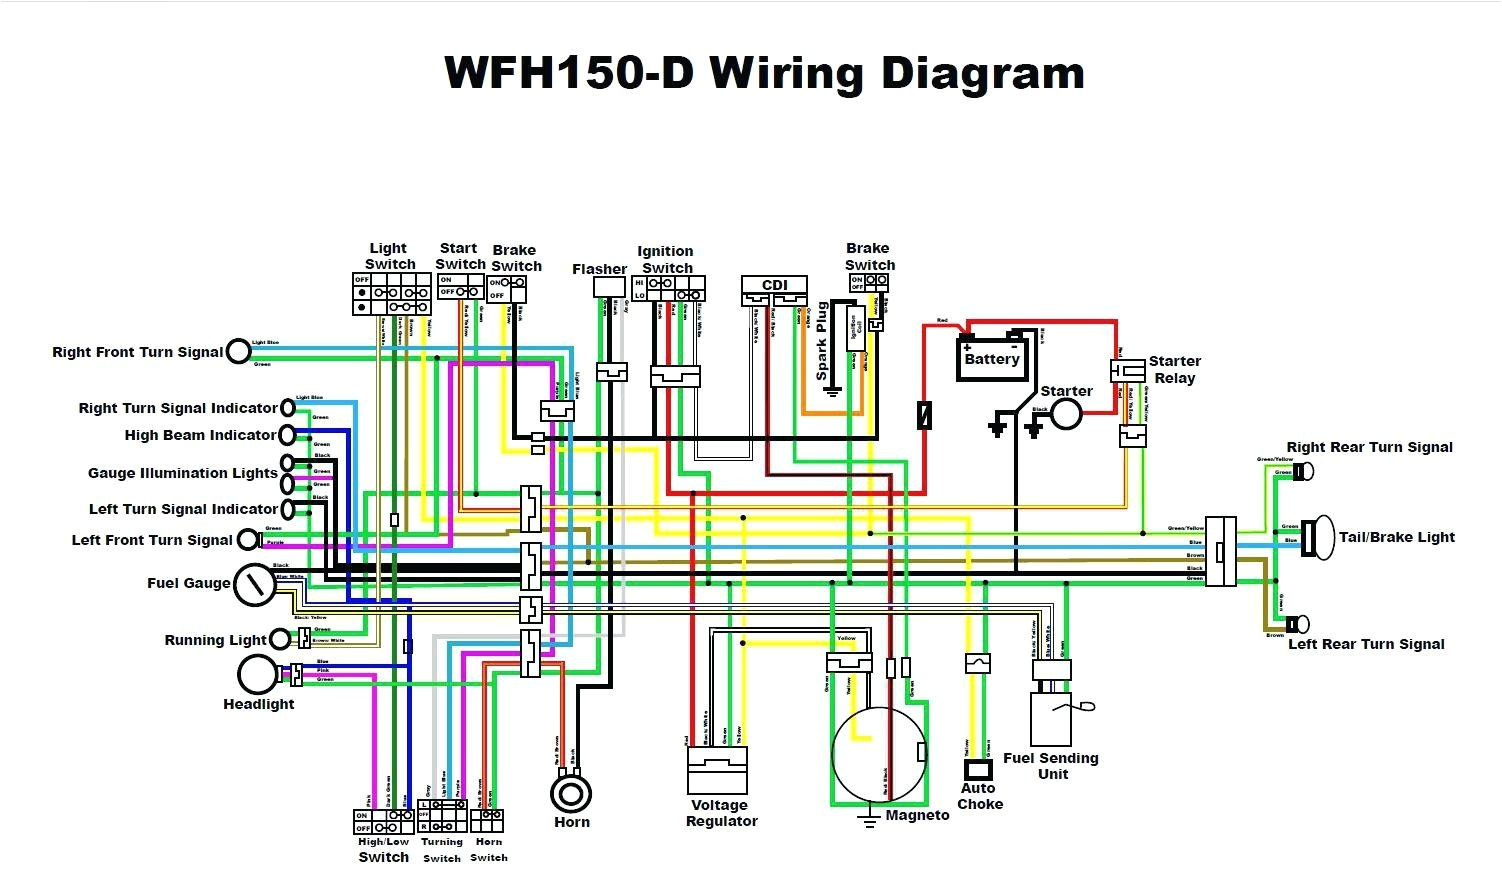 amor 50cc wiring diagram wiring diagram site 50cc wiring diagram wiring diagrams konsult amor 50cc wiring